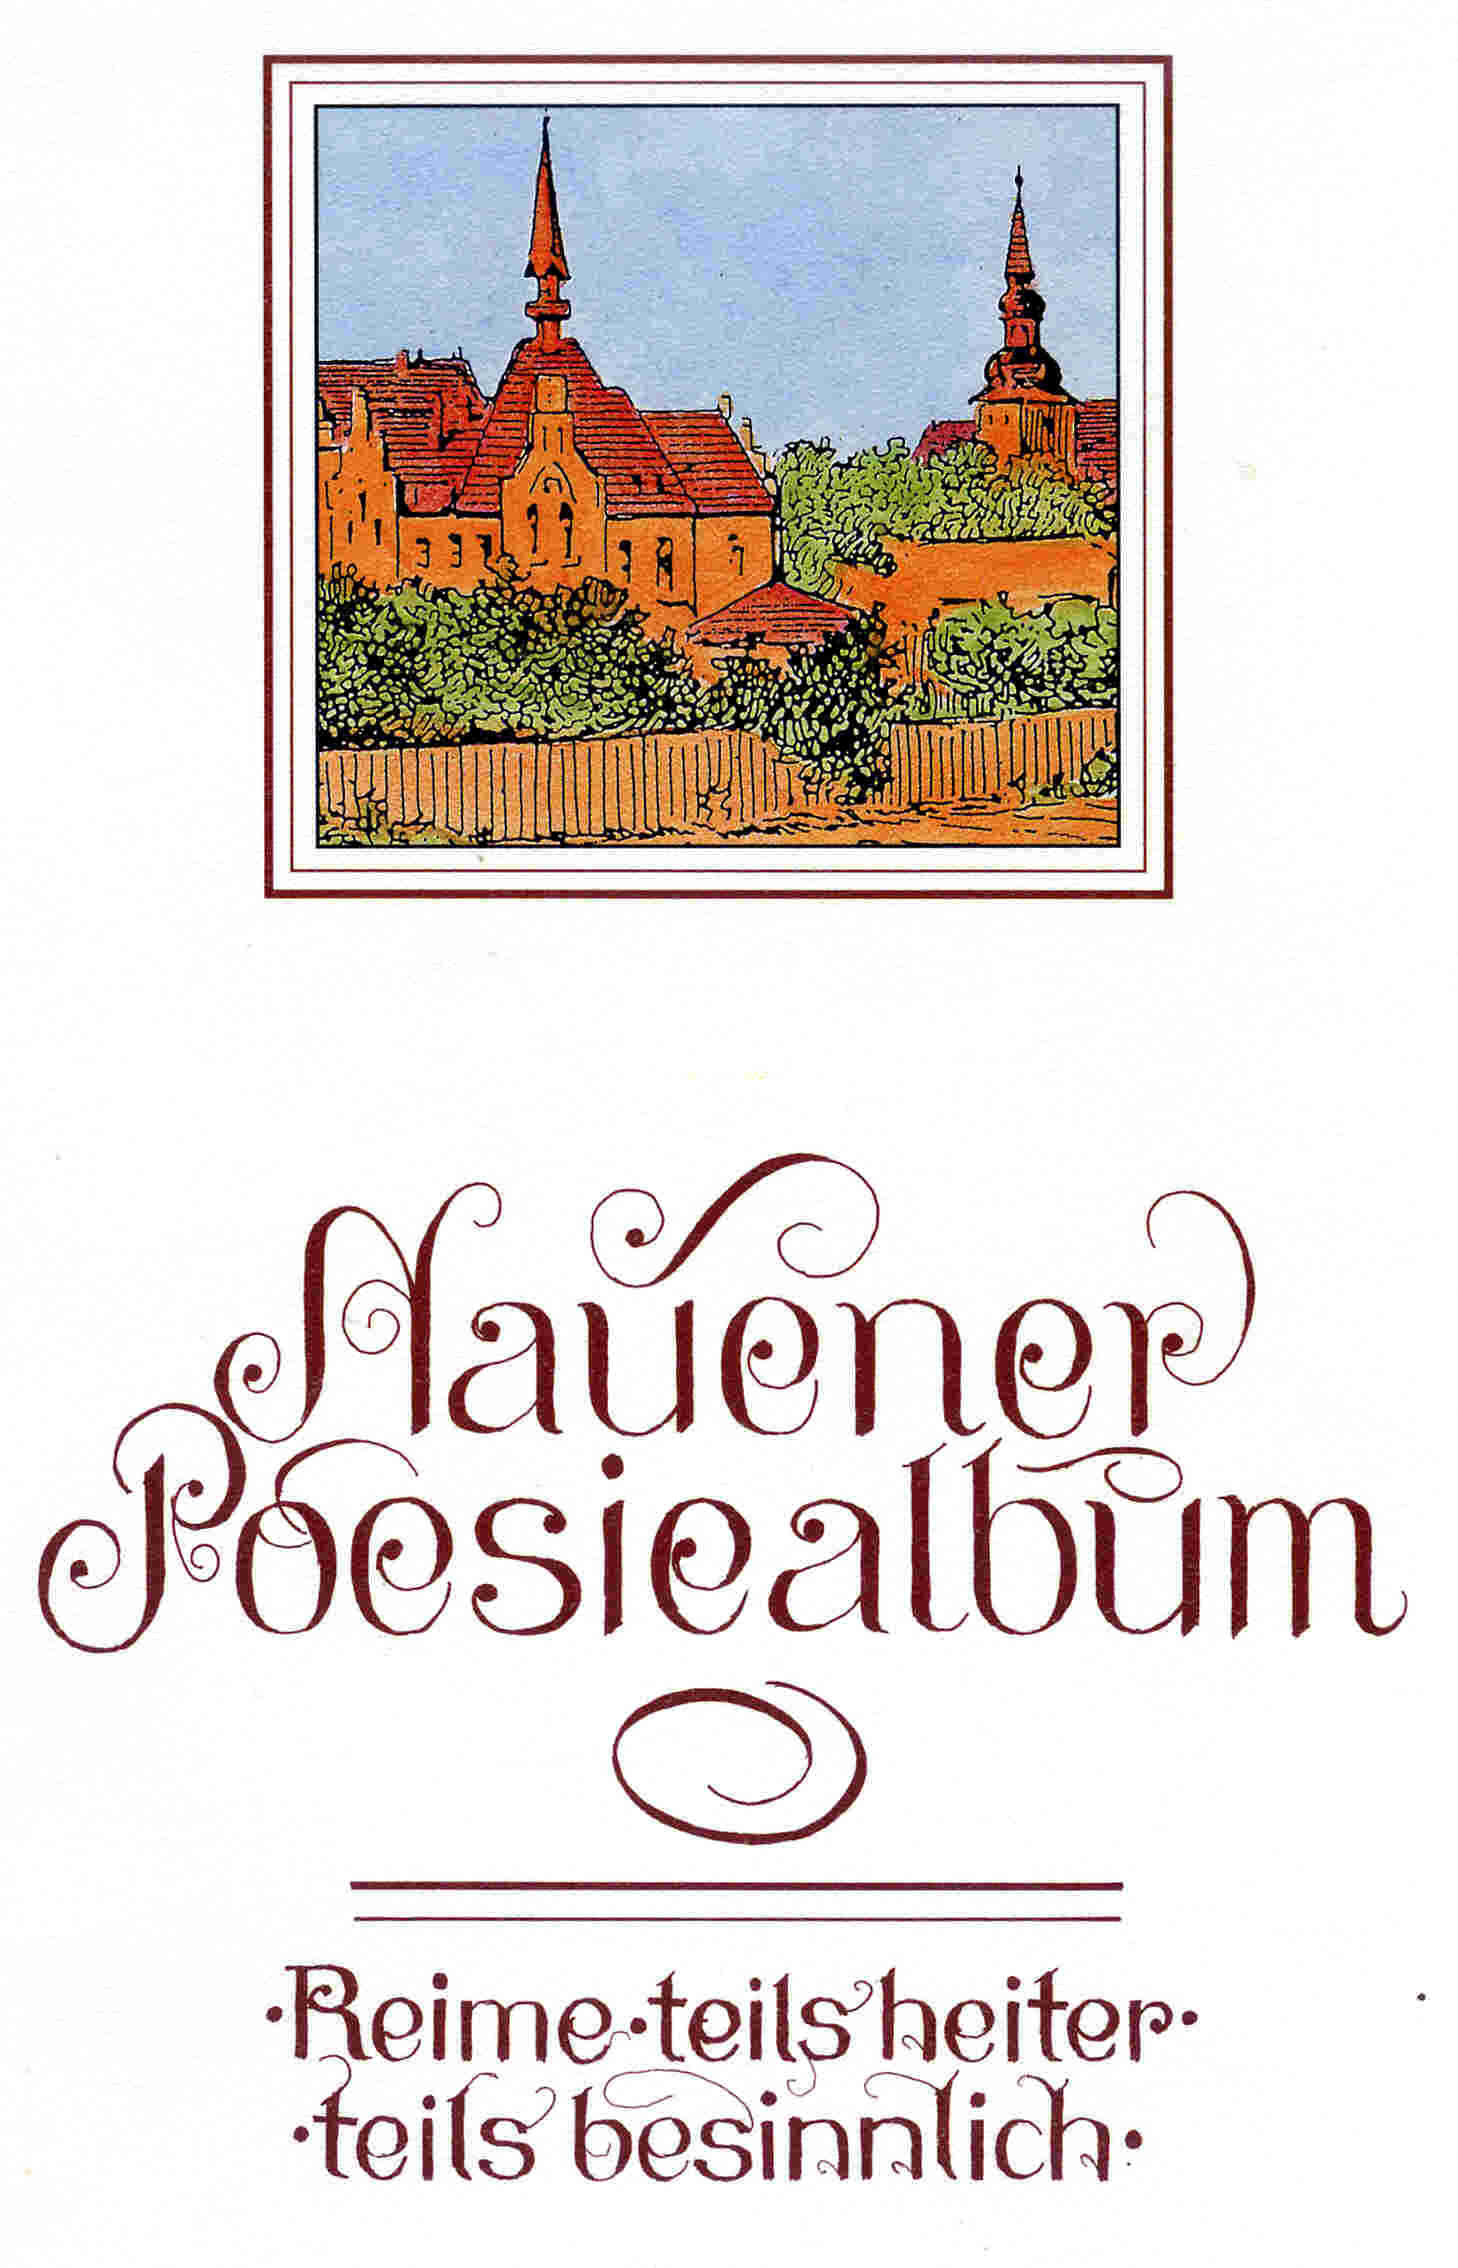 1991 Nauener Poesiealbum